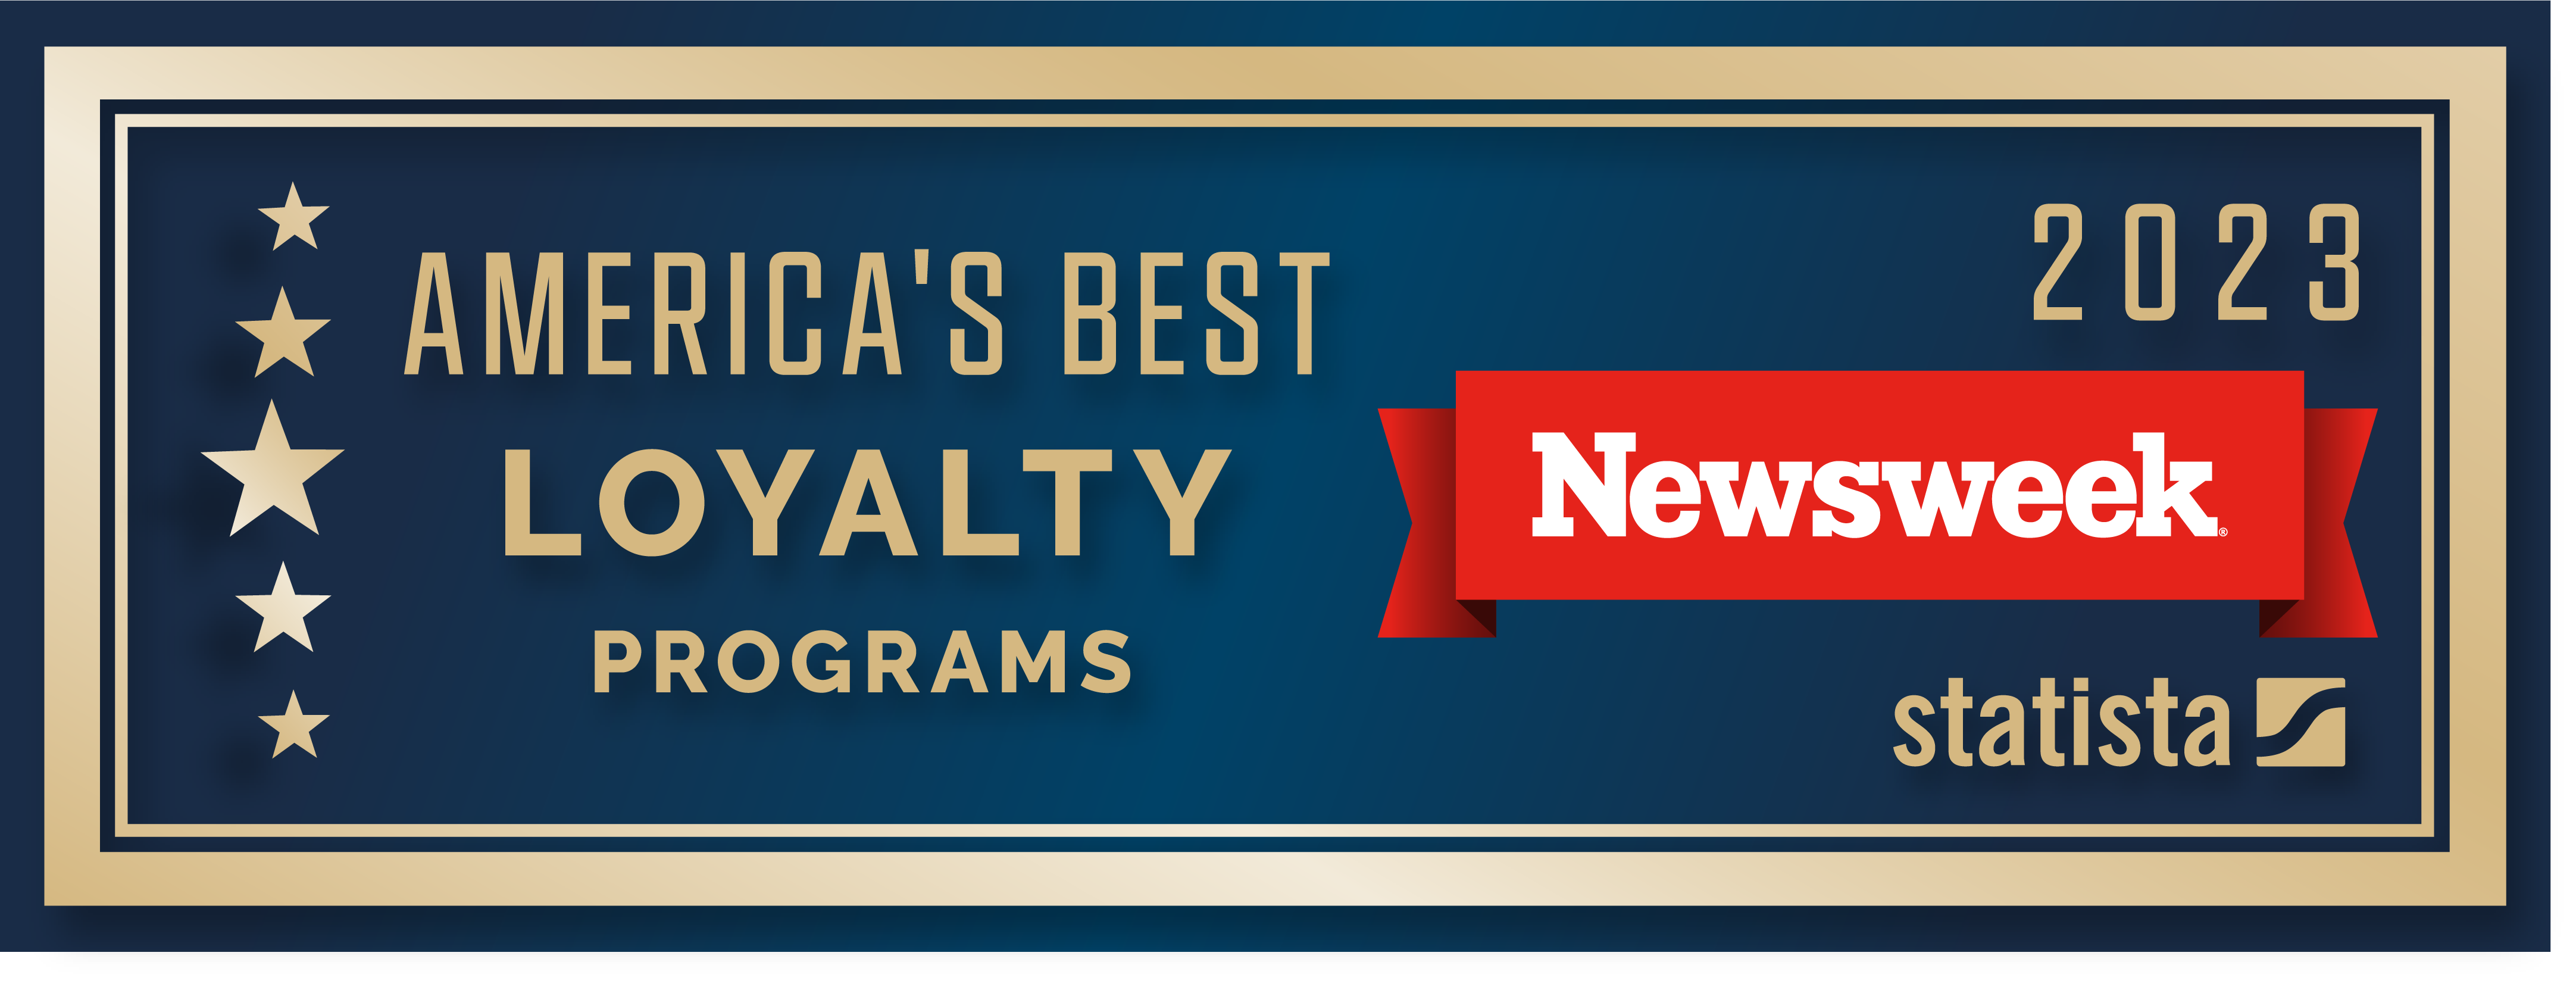 America's Best Loyalty Program Award 2022